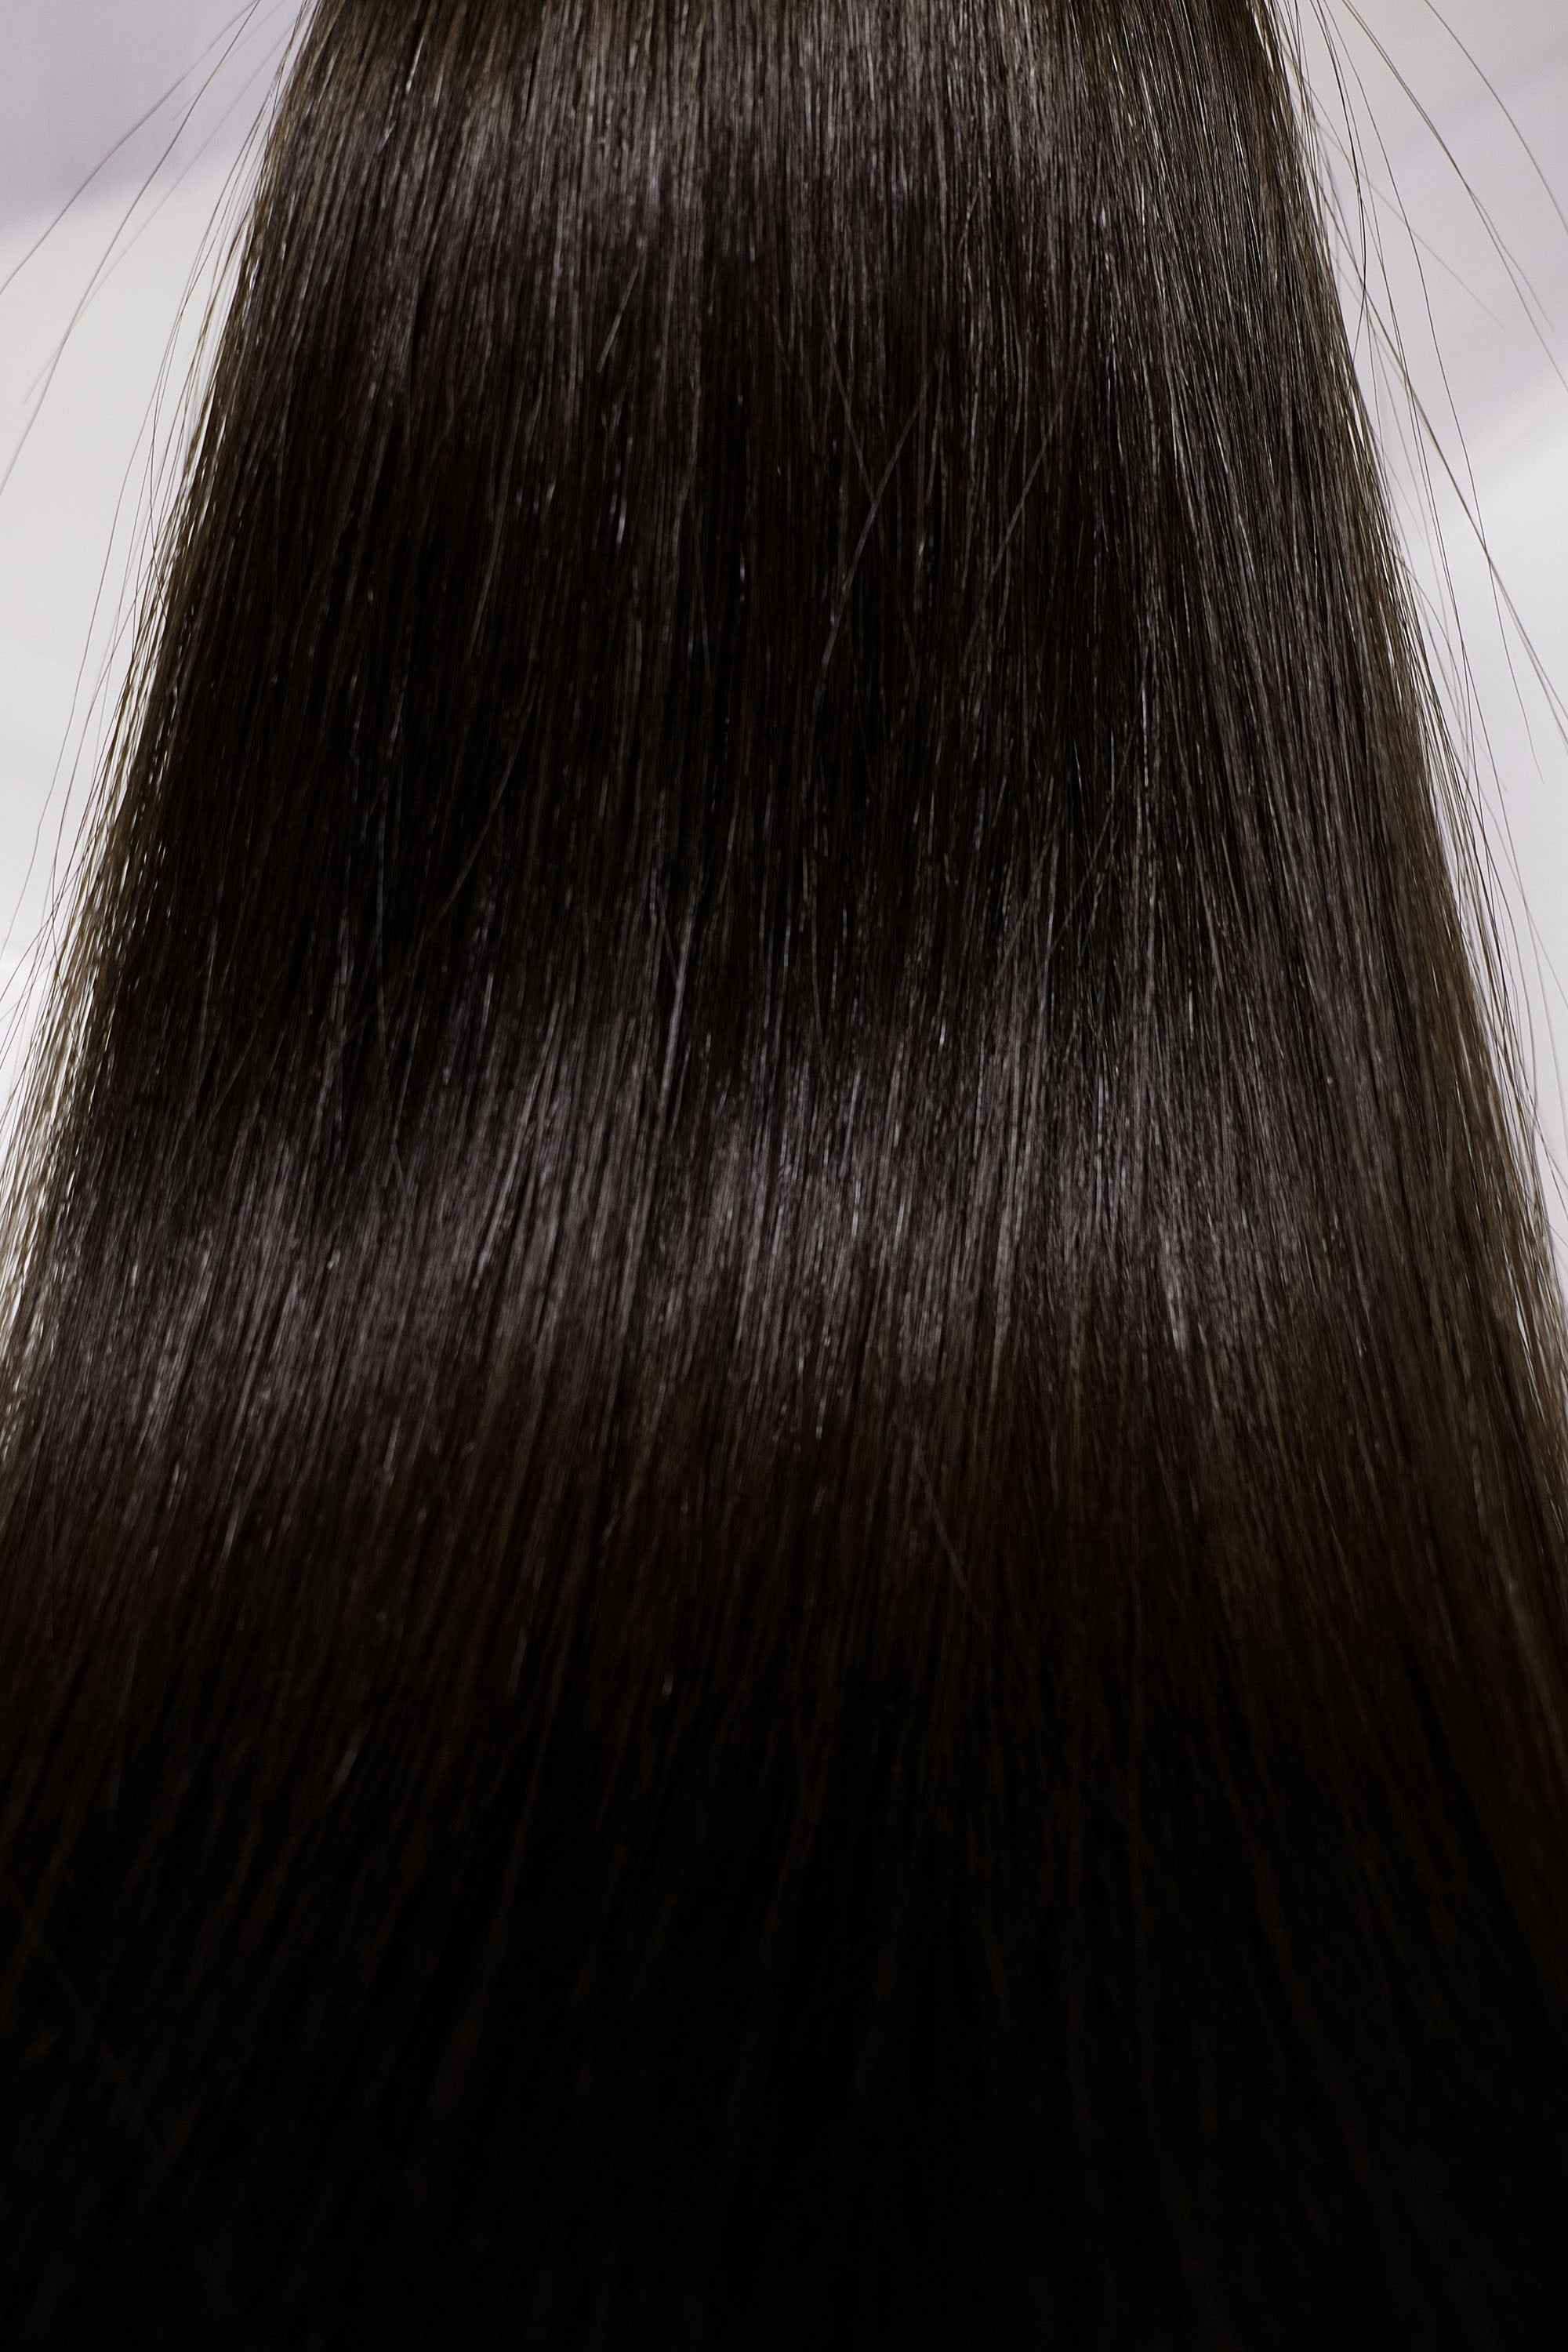 Behair professional Keratin Tip "Premium" 24" (60cm) Natural Straight Natural Black #1B - 25g (Standart - 0.7g each pcs) hair extensions